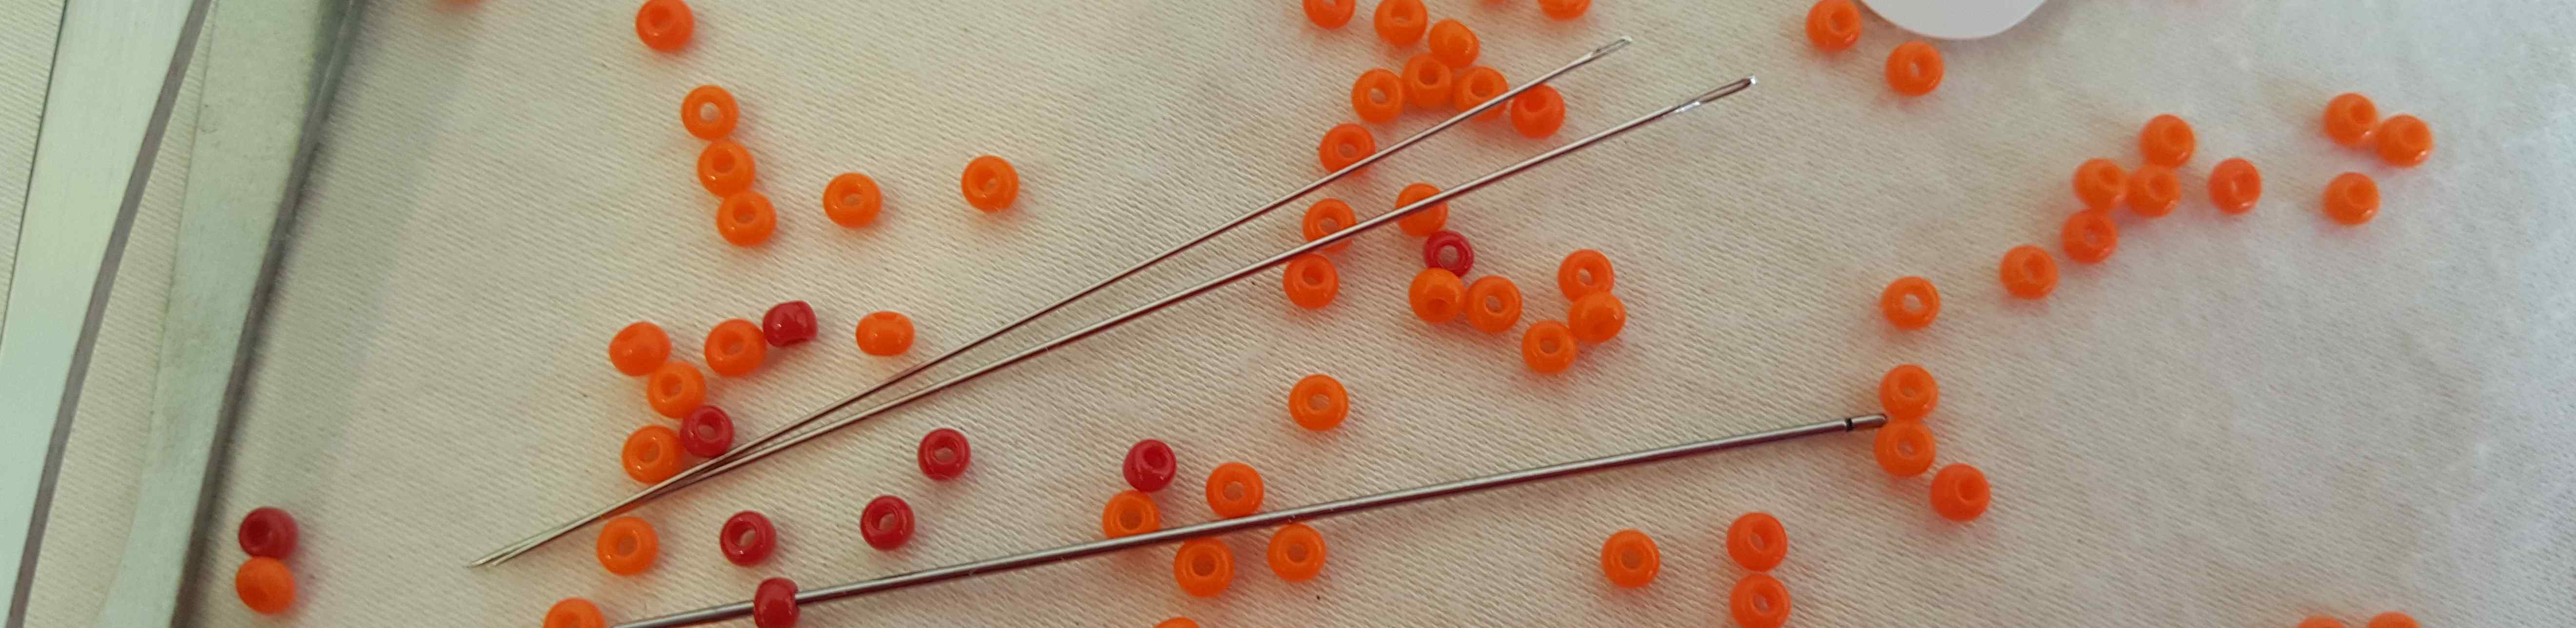 Beads and beading needles